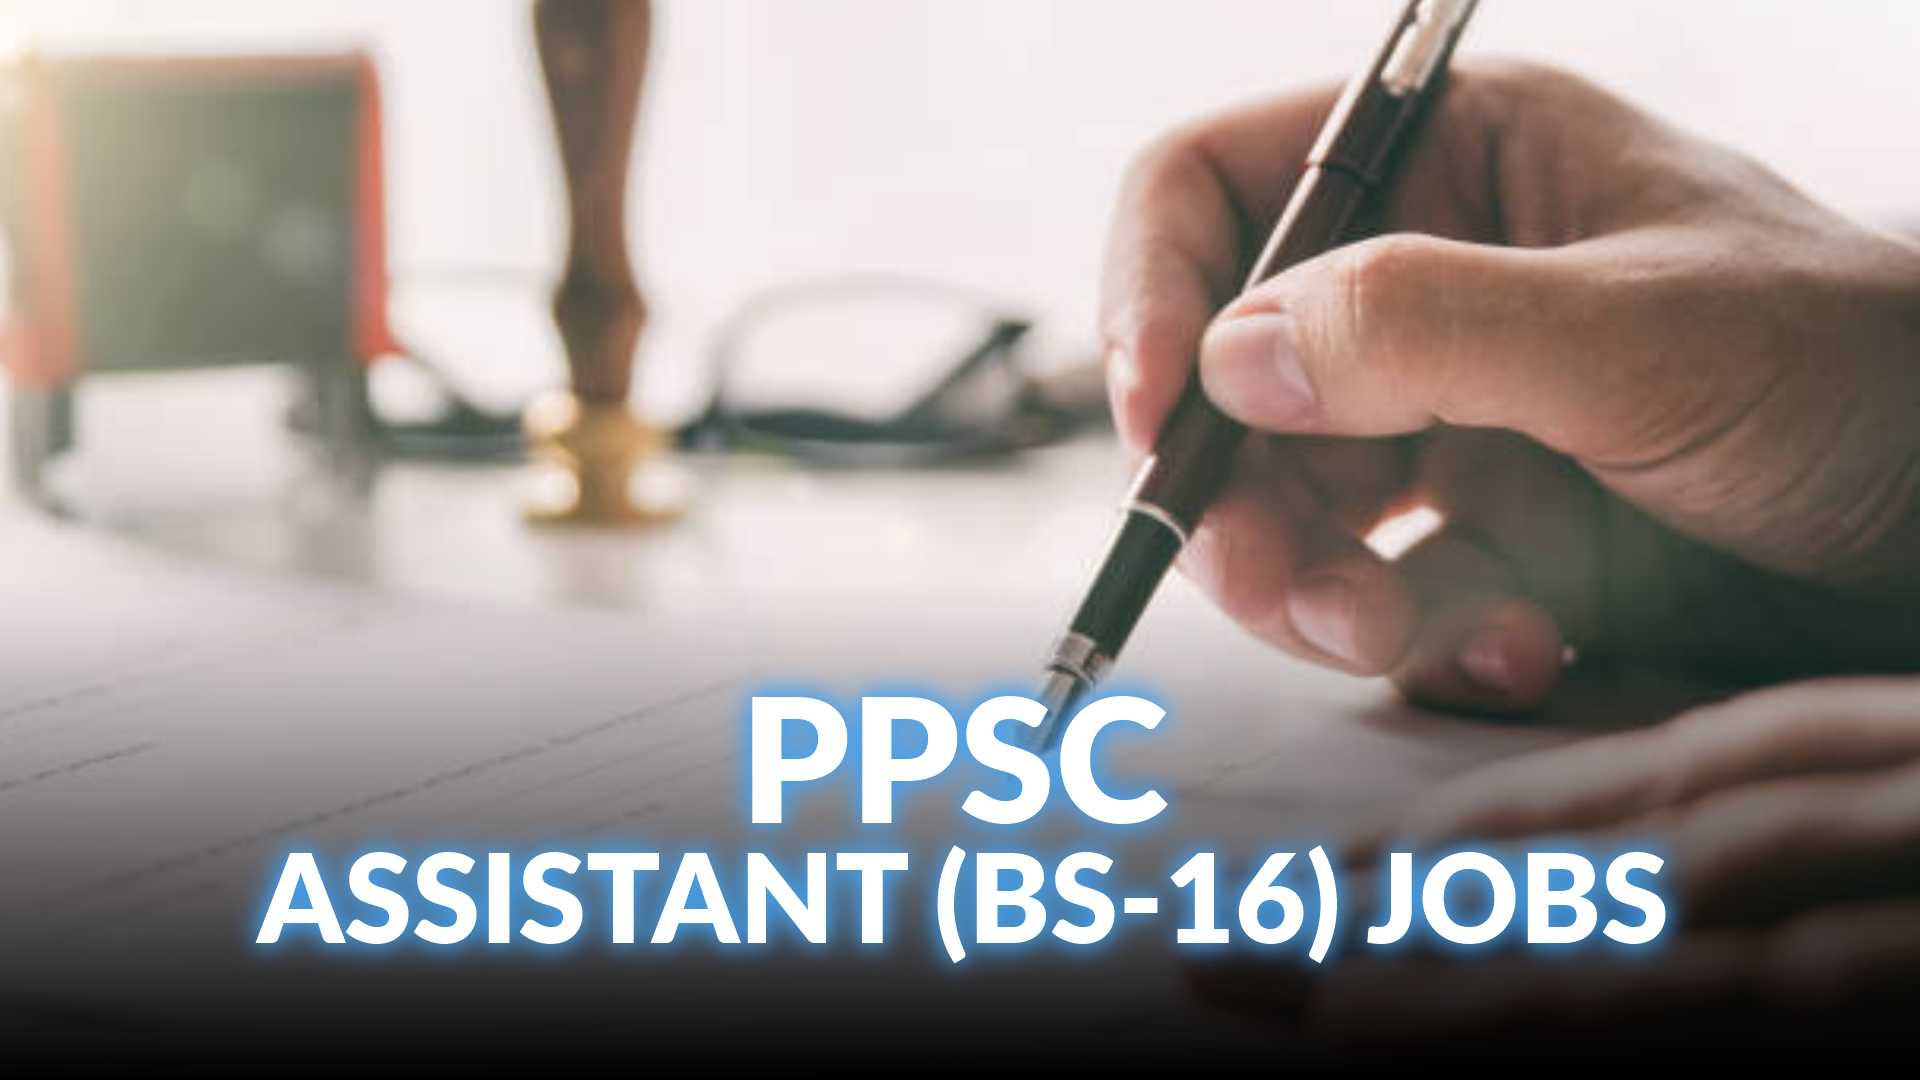 PPSC Assistant (BS-16) Jobs Complete Preparation Course